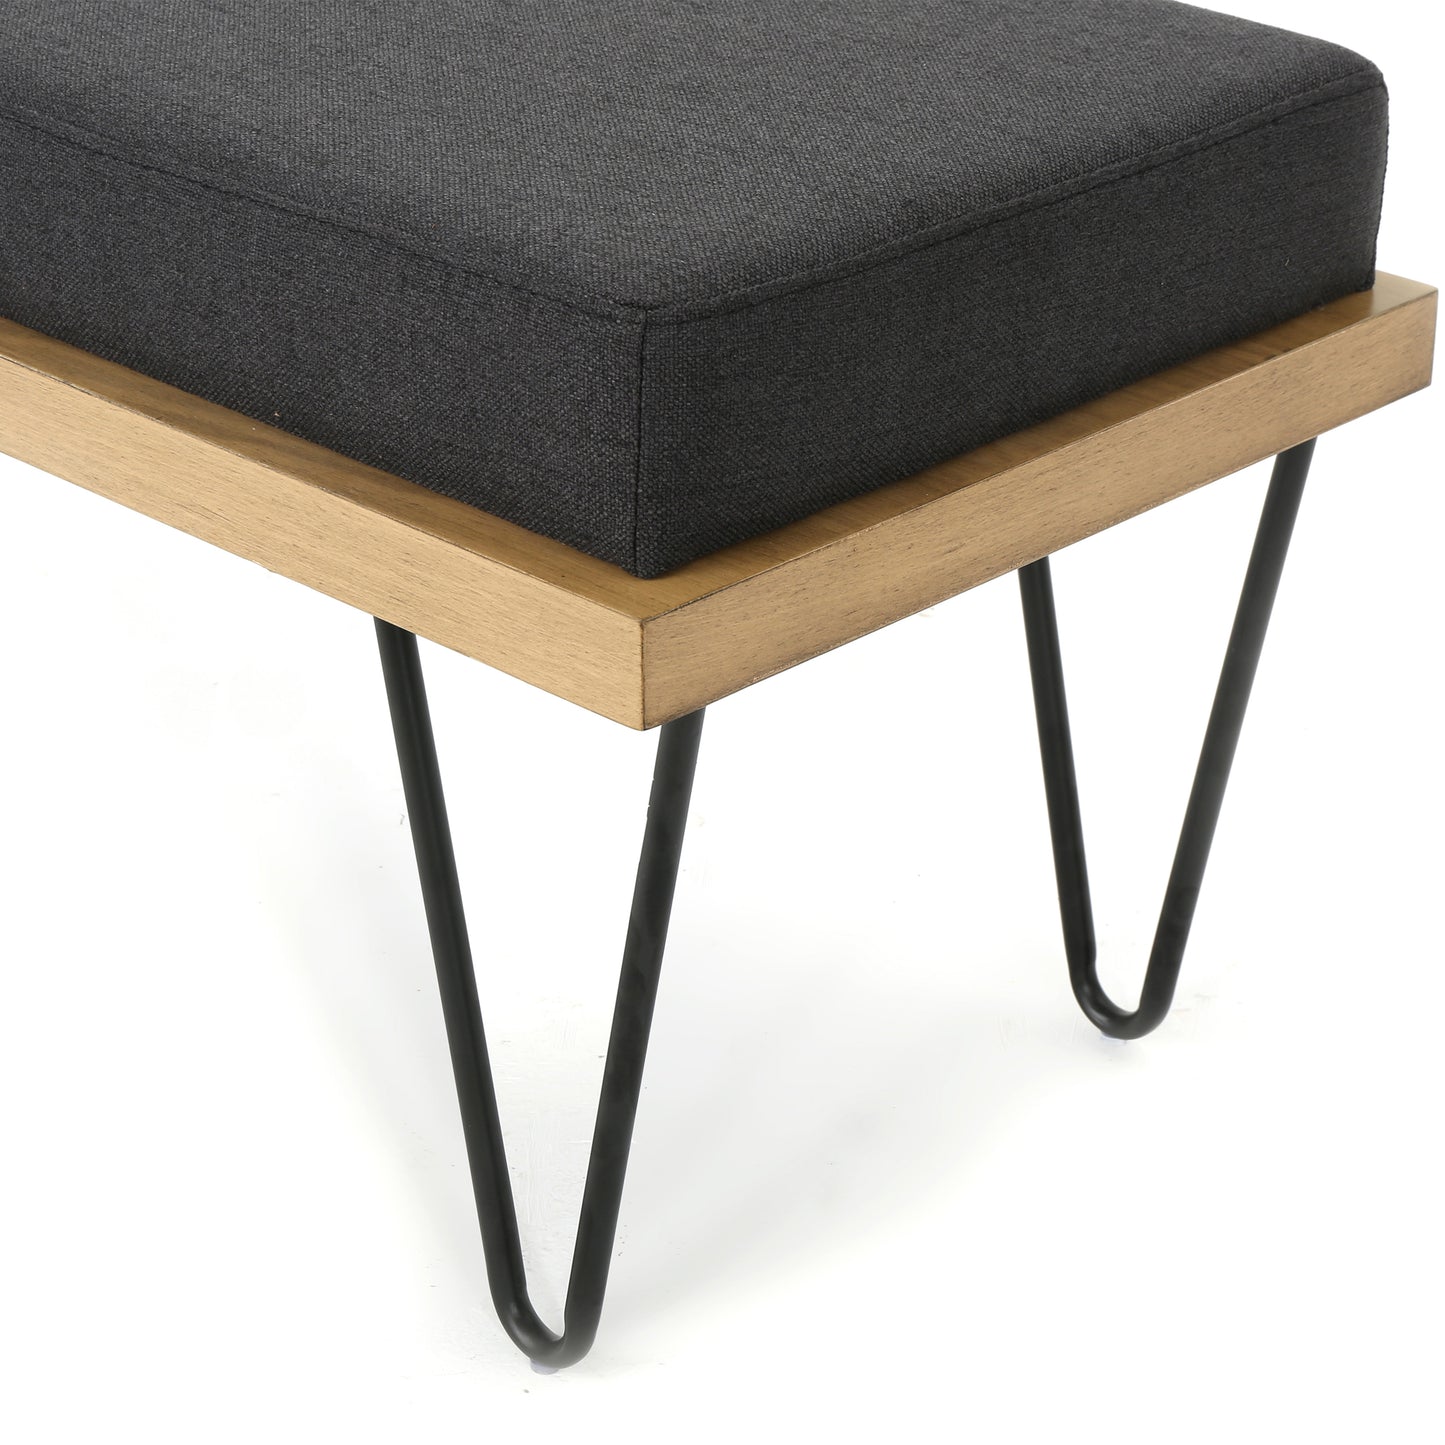 Elaina Industrial Modern Fabric Bench